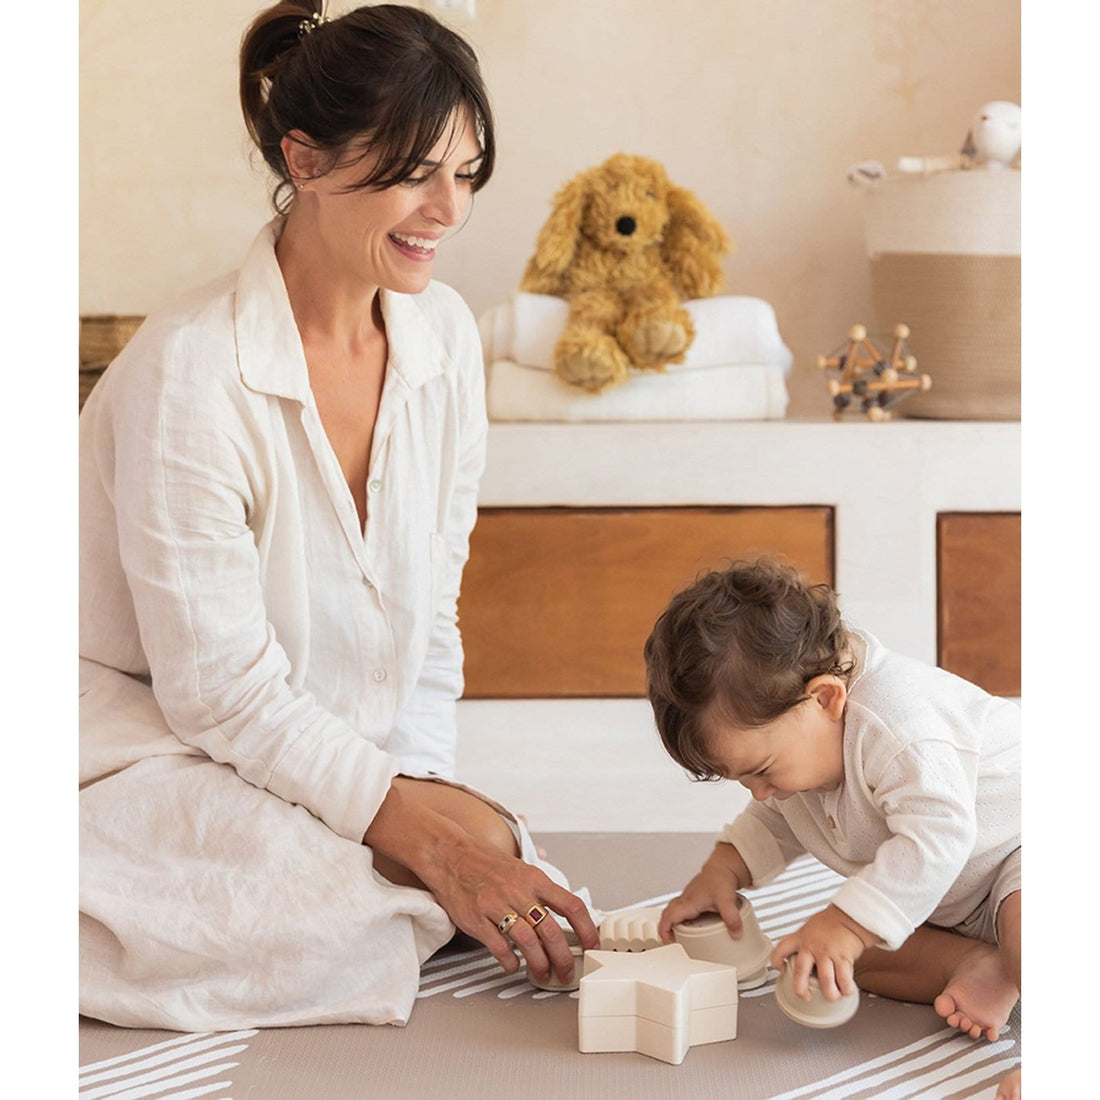 toddlekind-prettier-playmat-sand-line-tan-120x180cm-6-tiles-12-edging-borders-baby-nursery-home-decor-todk-339058-00_6